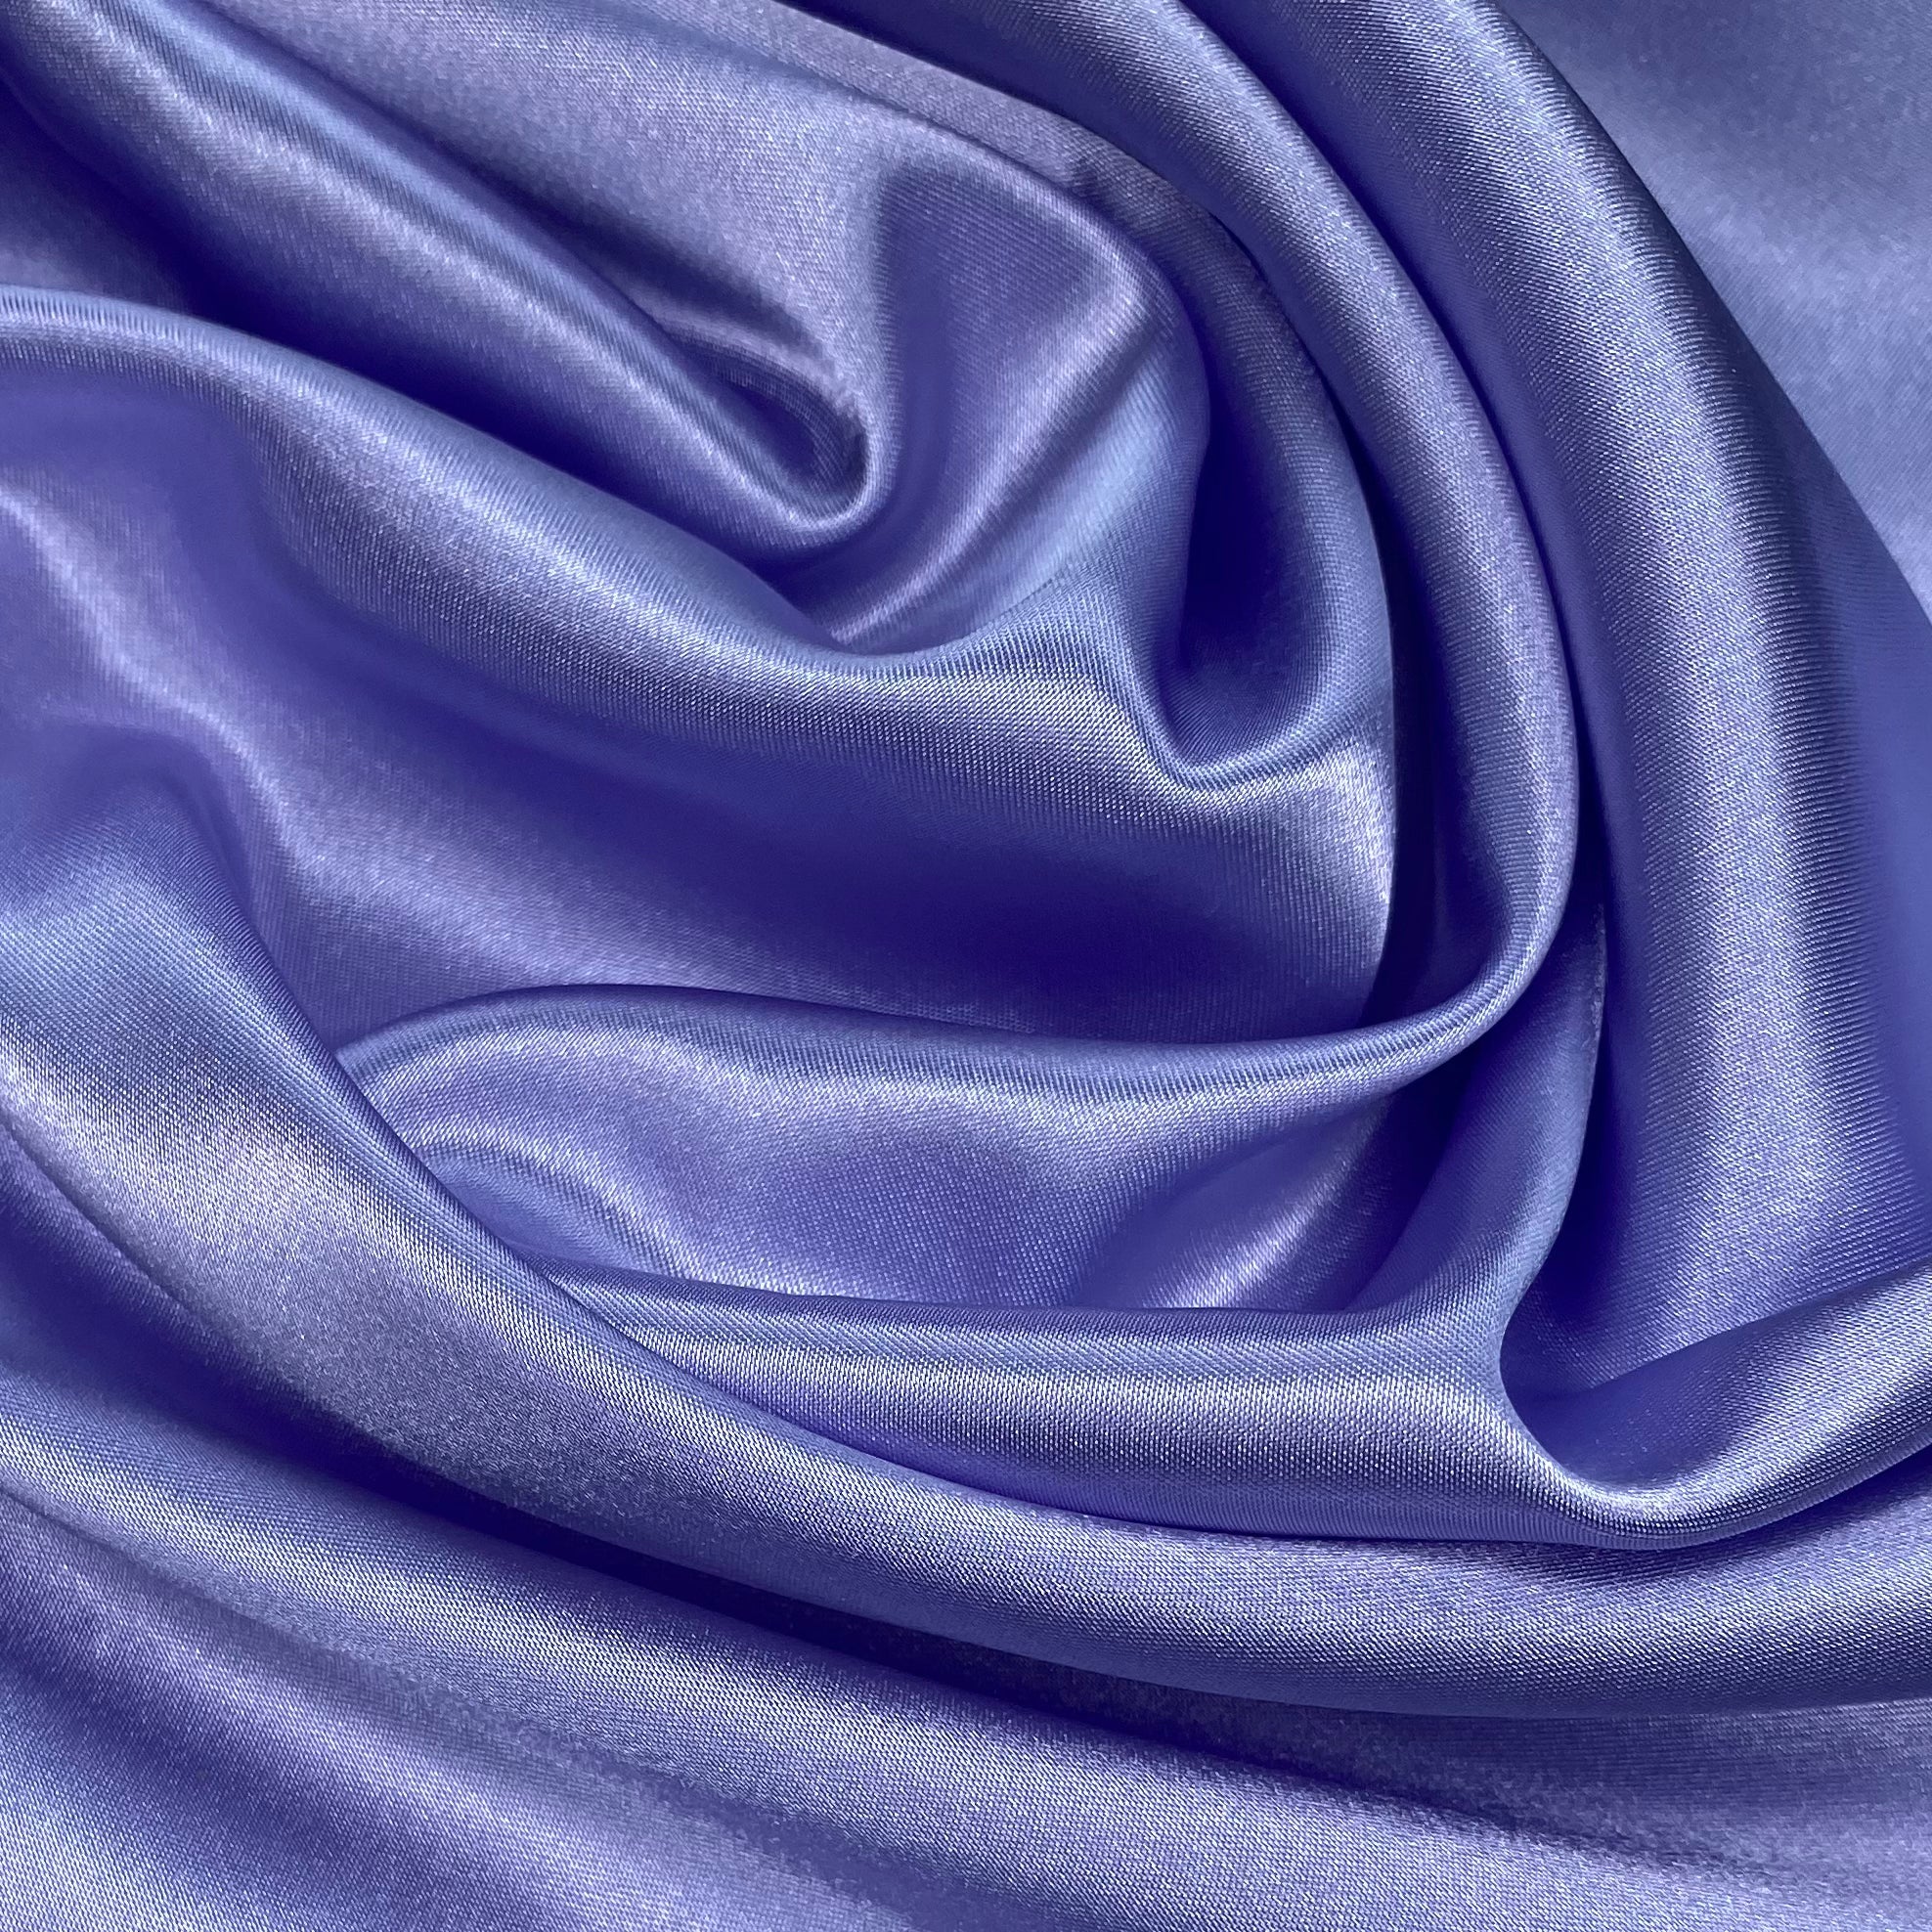 Polyester Charmeuse - 58” - Lavender